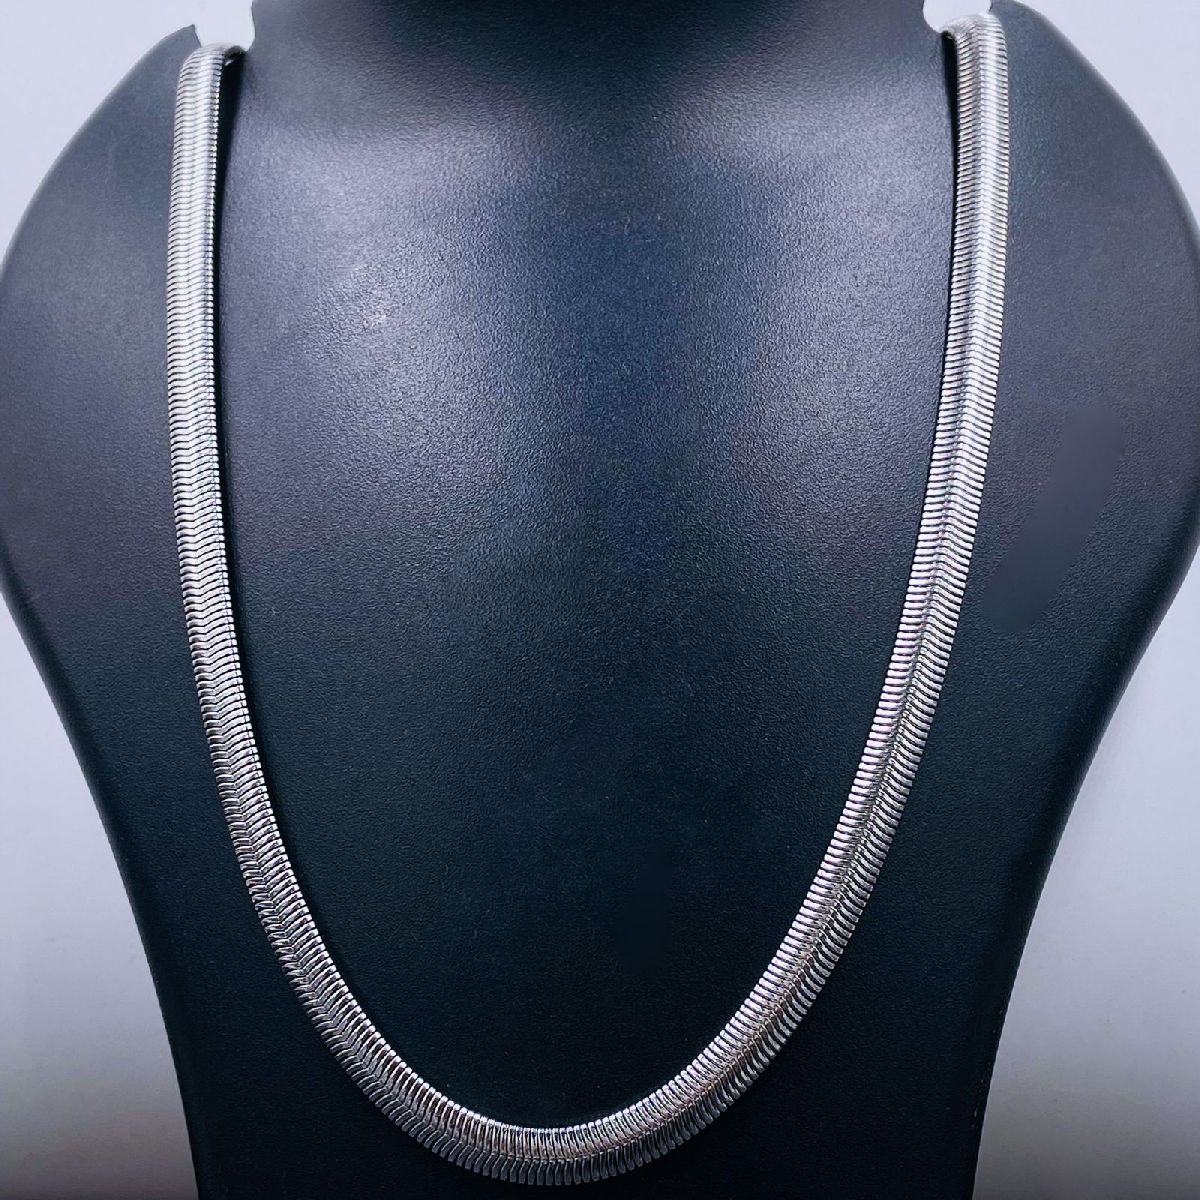 Bendable Silver Snake Necklace Choker Jewelry, Women - Slytherin Steam Punk  Gift | eBay